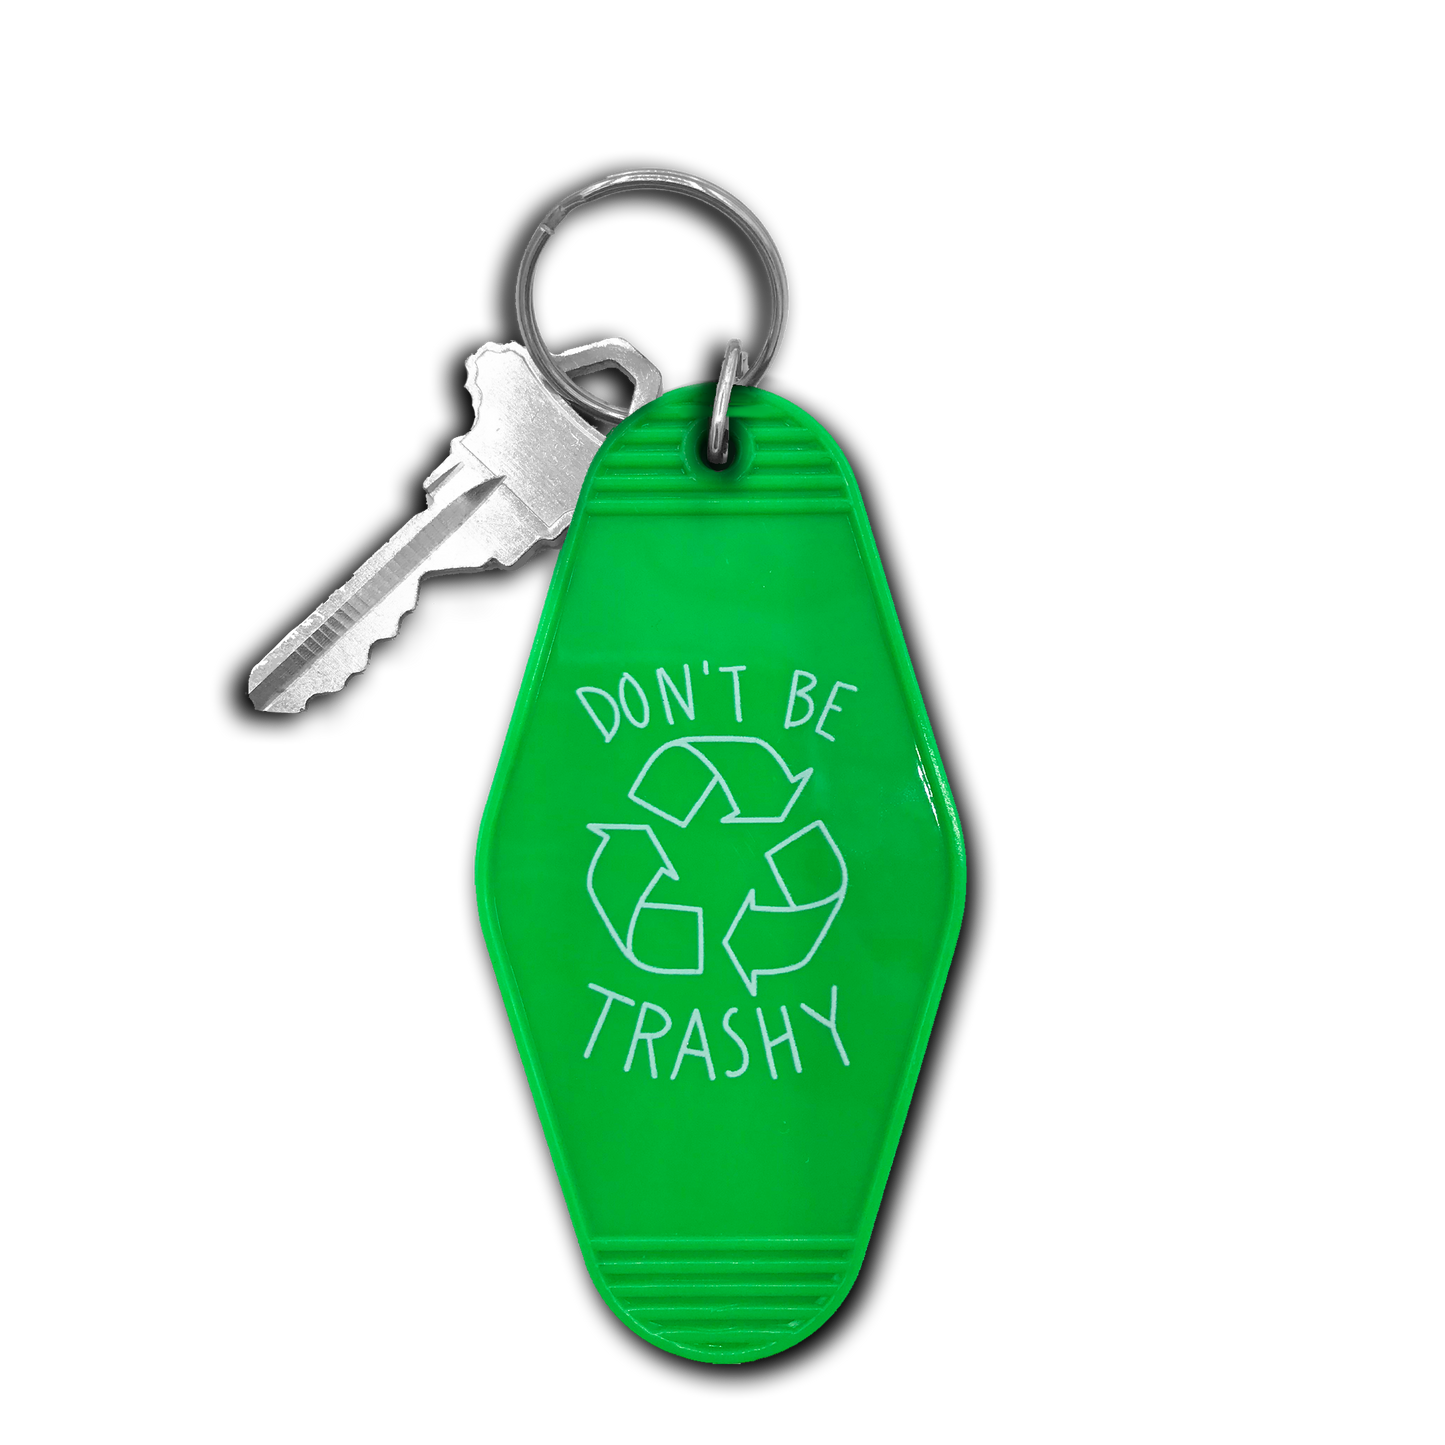 Don't Be Trashy Keychain